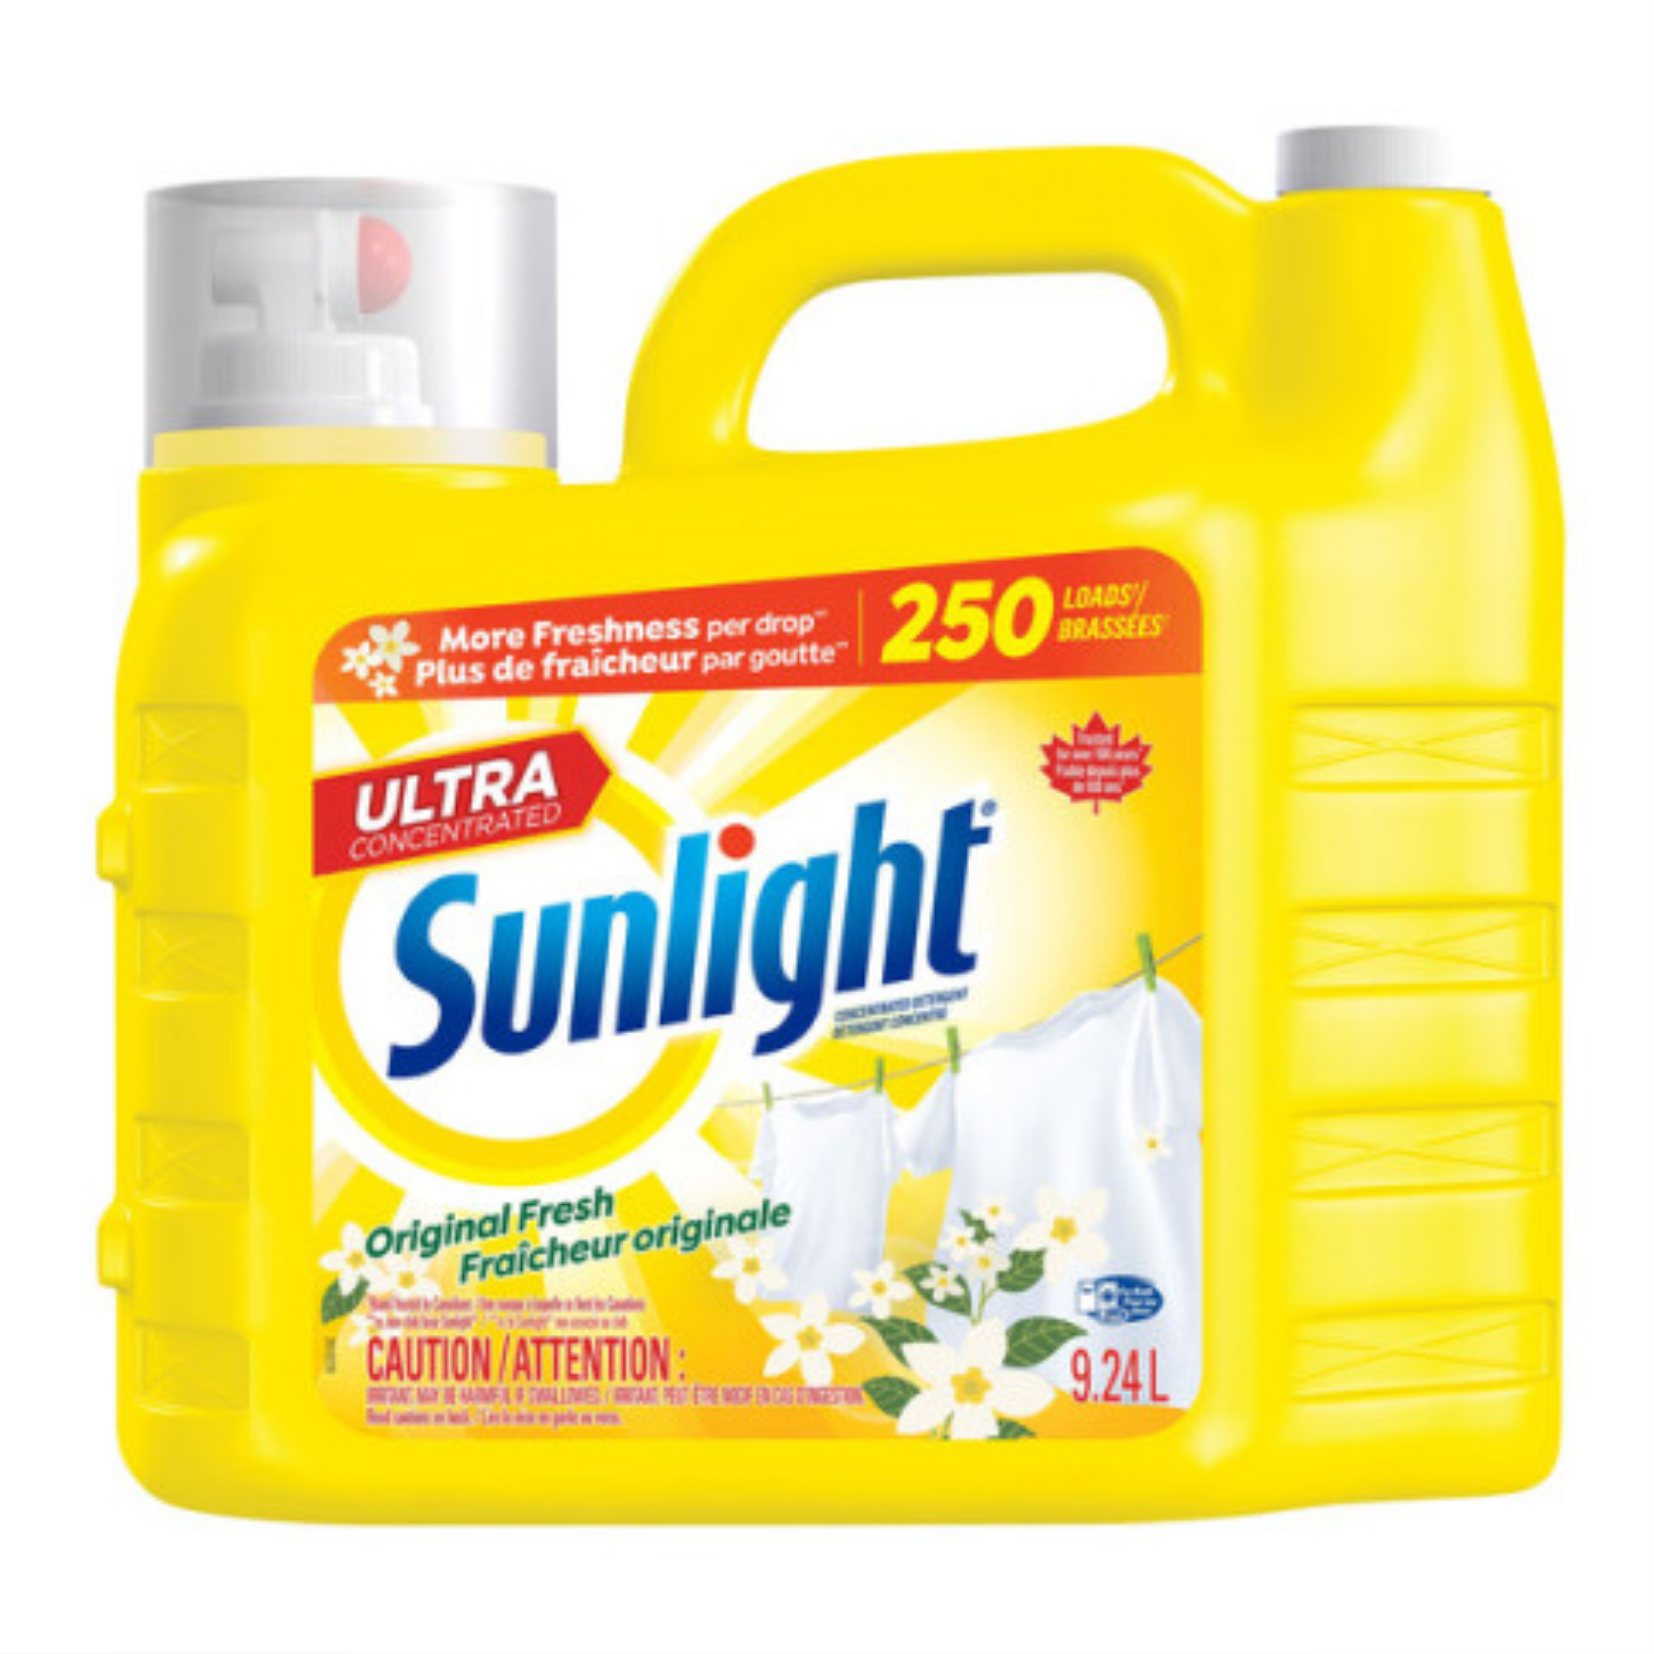 Sunlight Original Fresh Laundry Detergent 9.24L